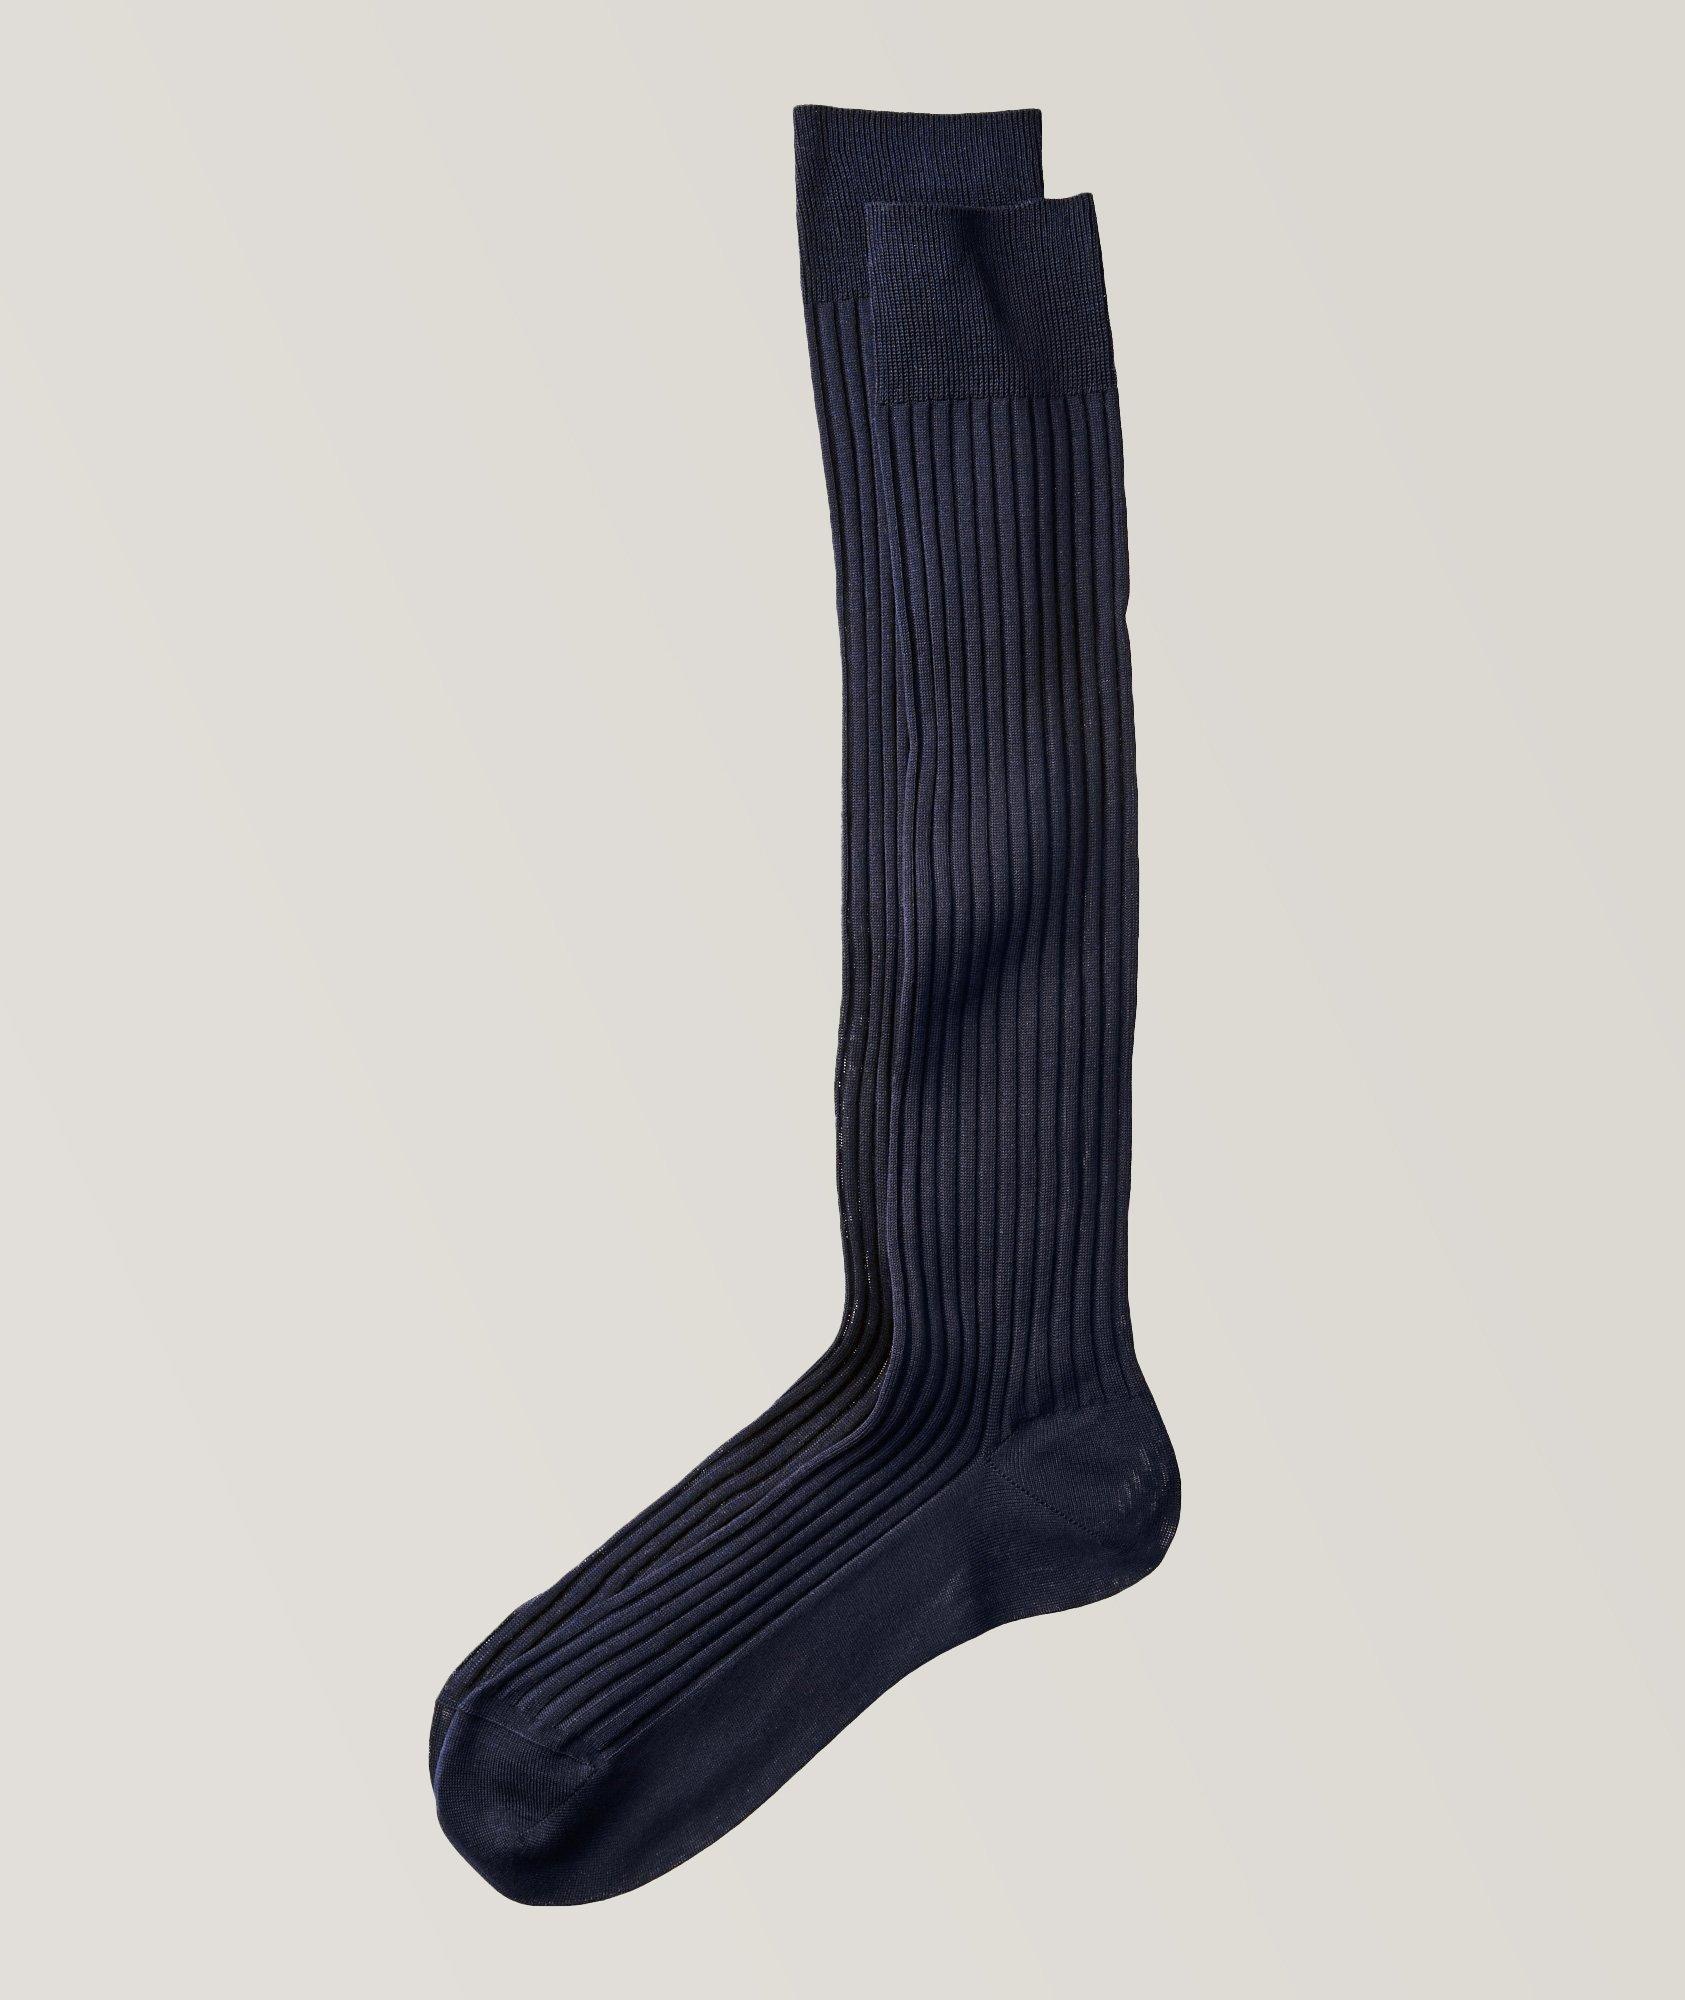 Ribbed Knit Dress Socks image 0